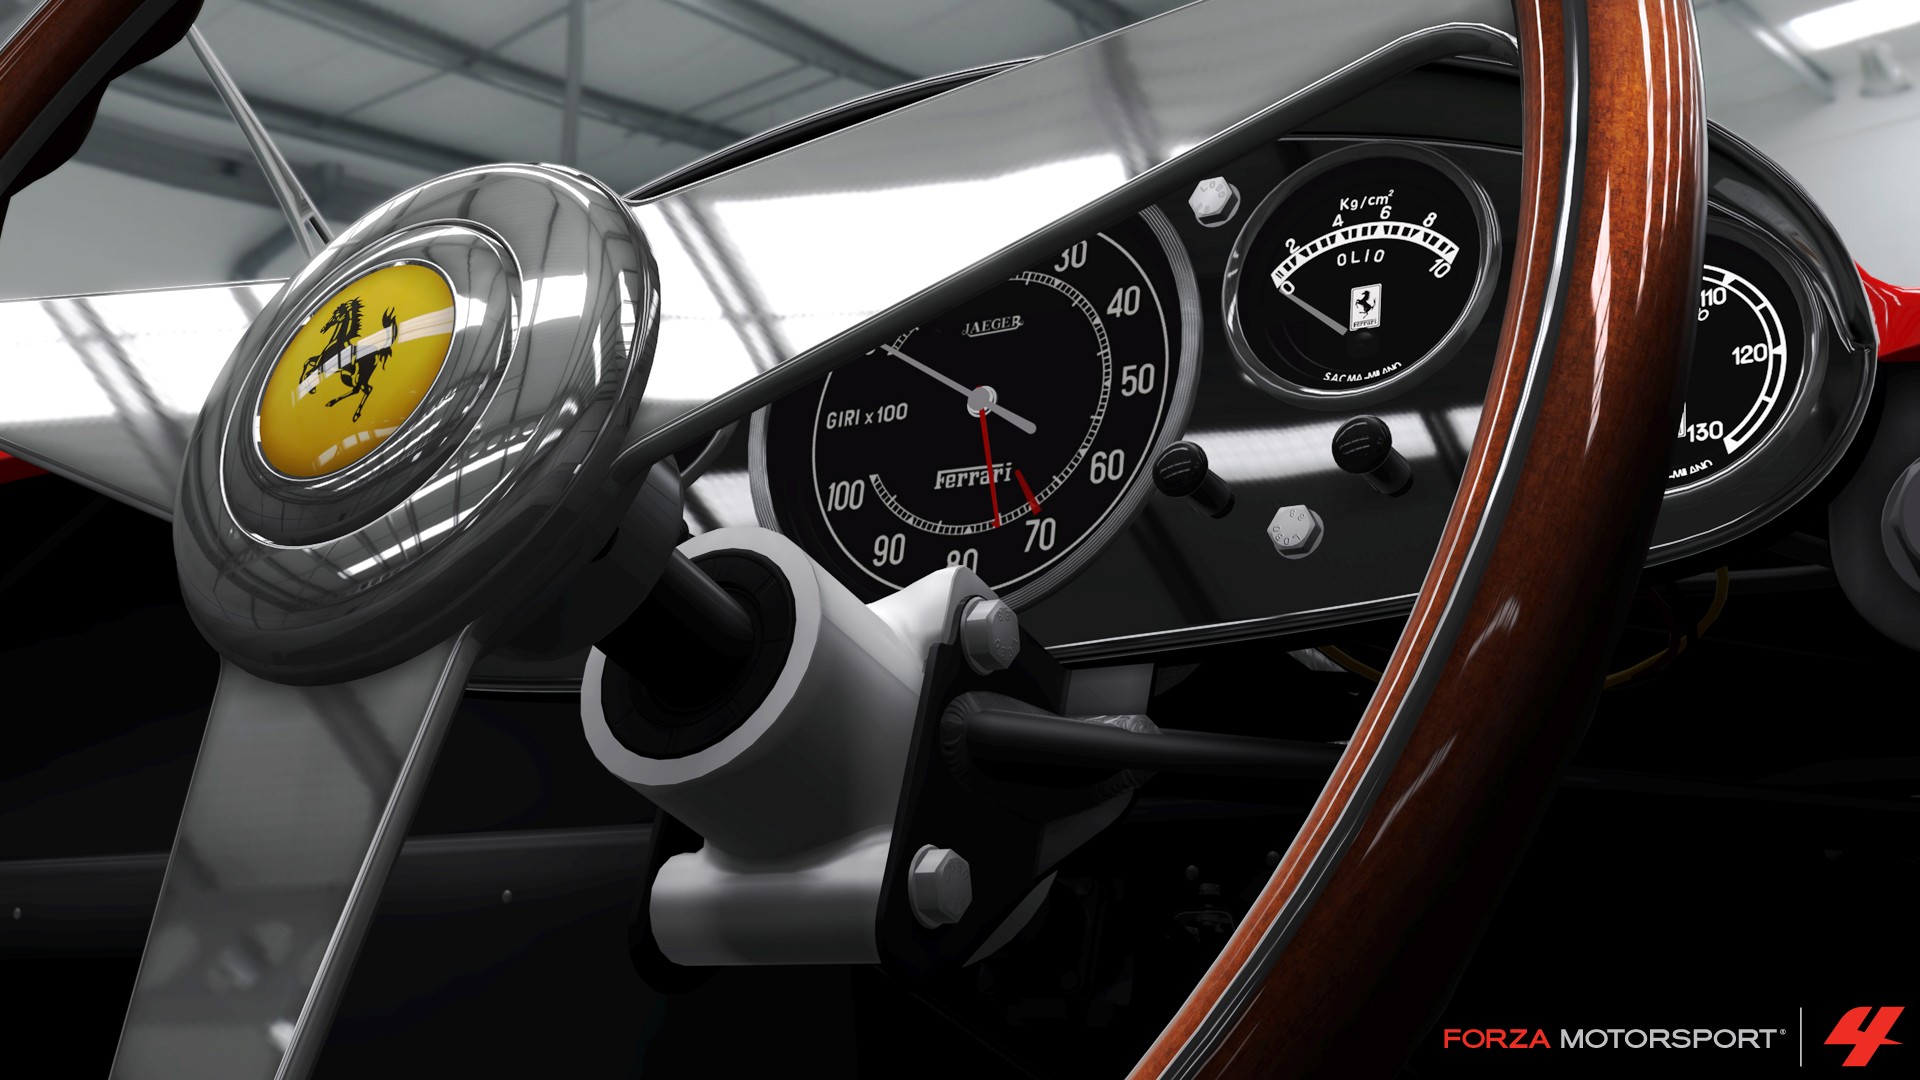 General 1920x1080 Forza Motorsport 4 car video games vehicle Ferrari car interior Turn 10 Studios